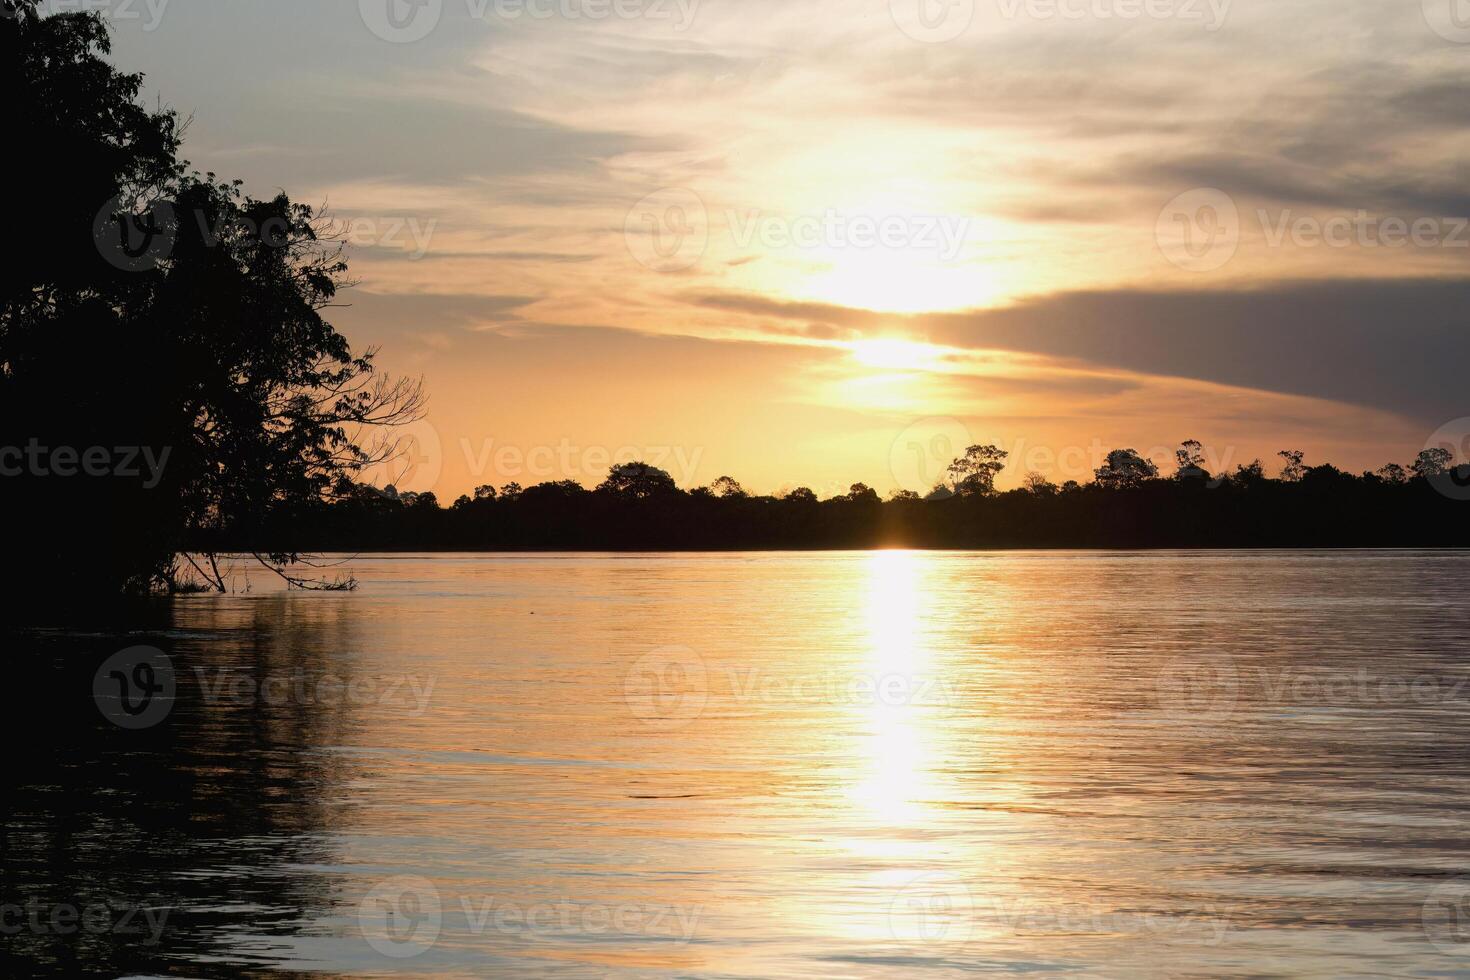 Sonnenuntergang auf amana Fluss, ein Amazonas Nebenfluss, Amazonas Zustand, Brasilien foto